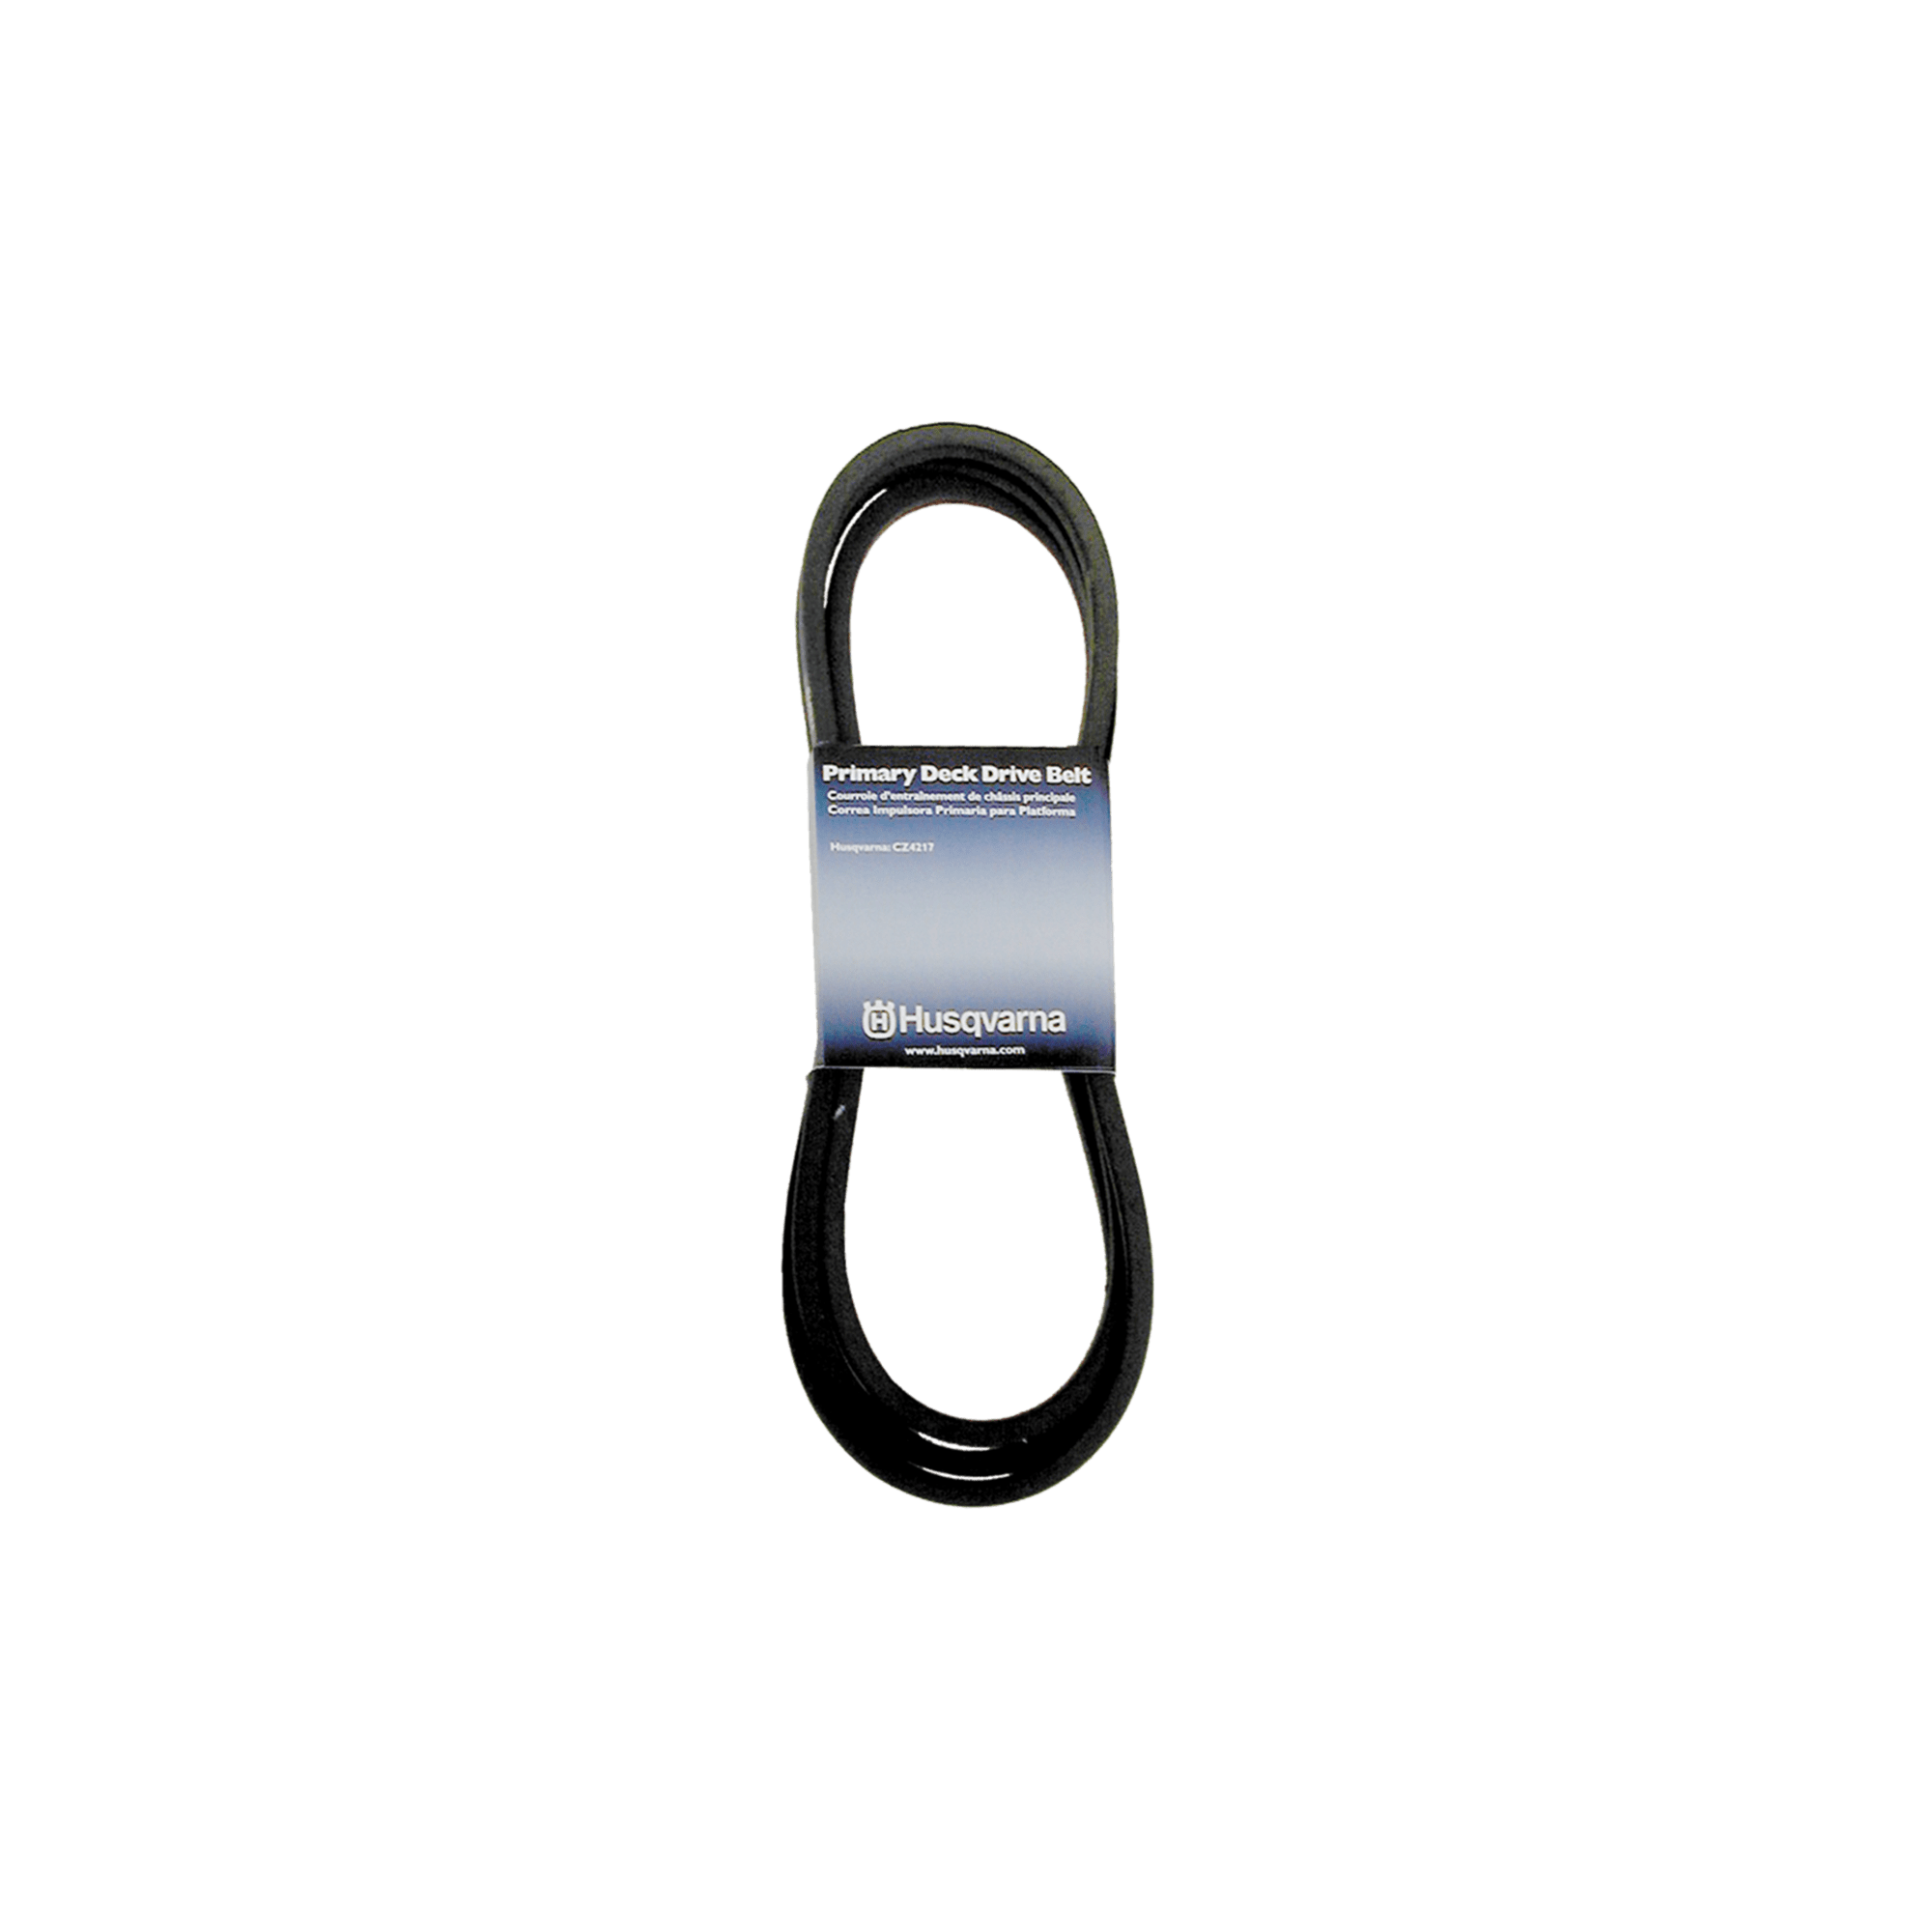 Image for Drive belt from HusqvarnaB2C